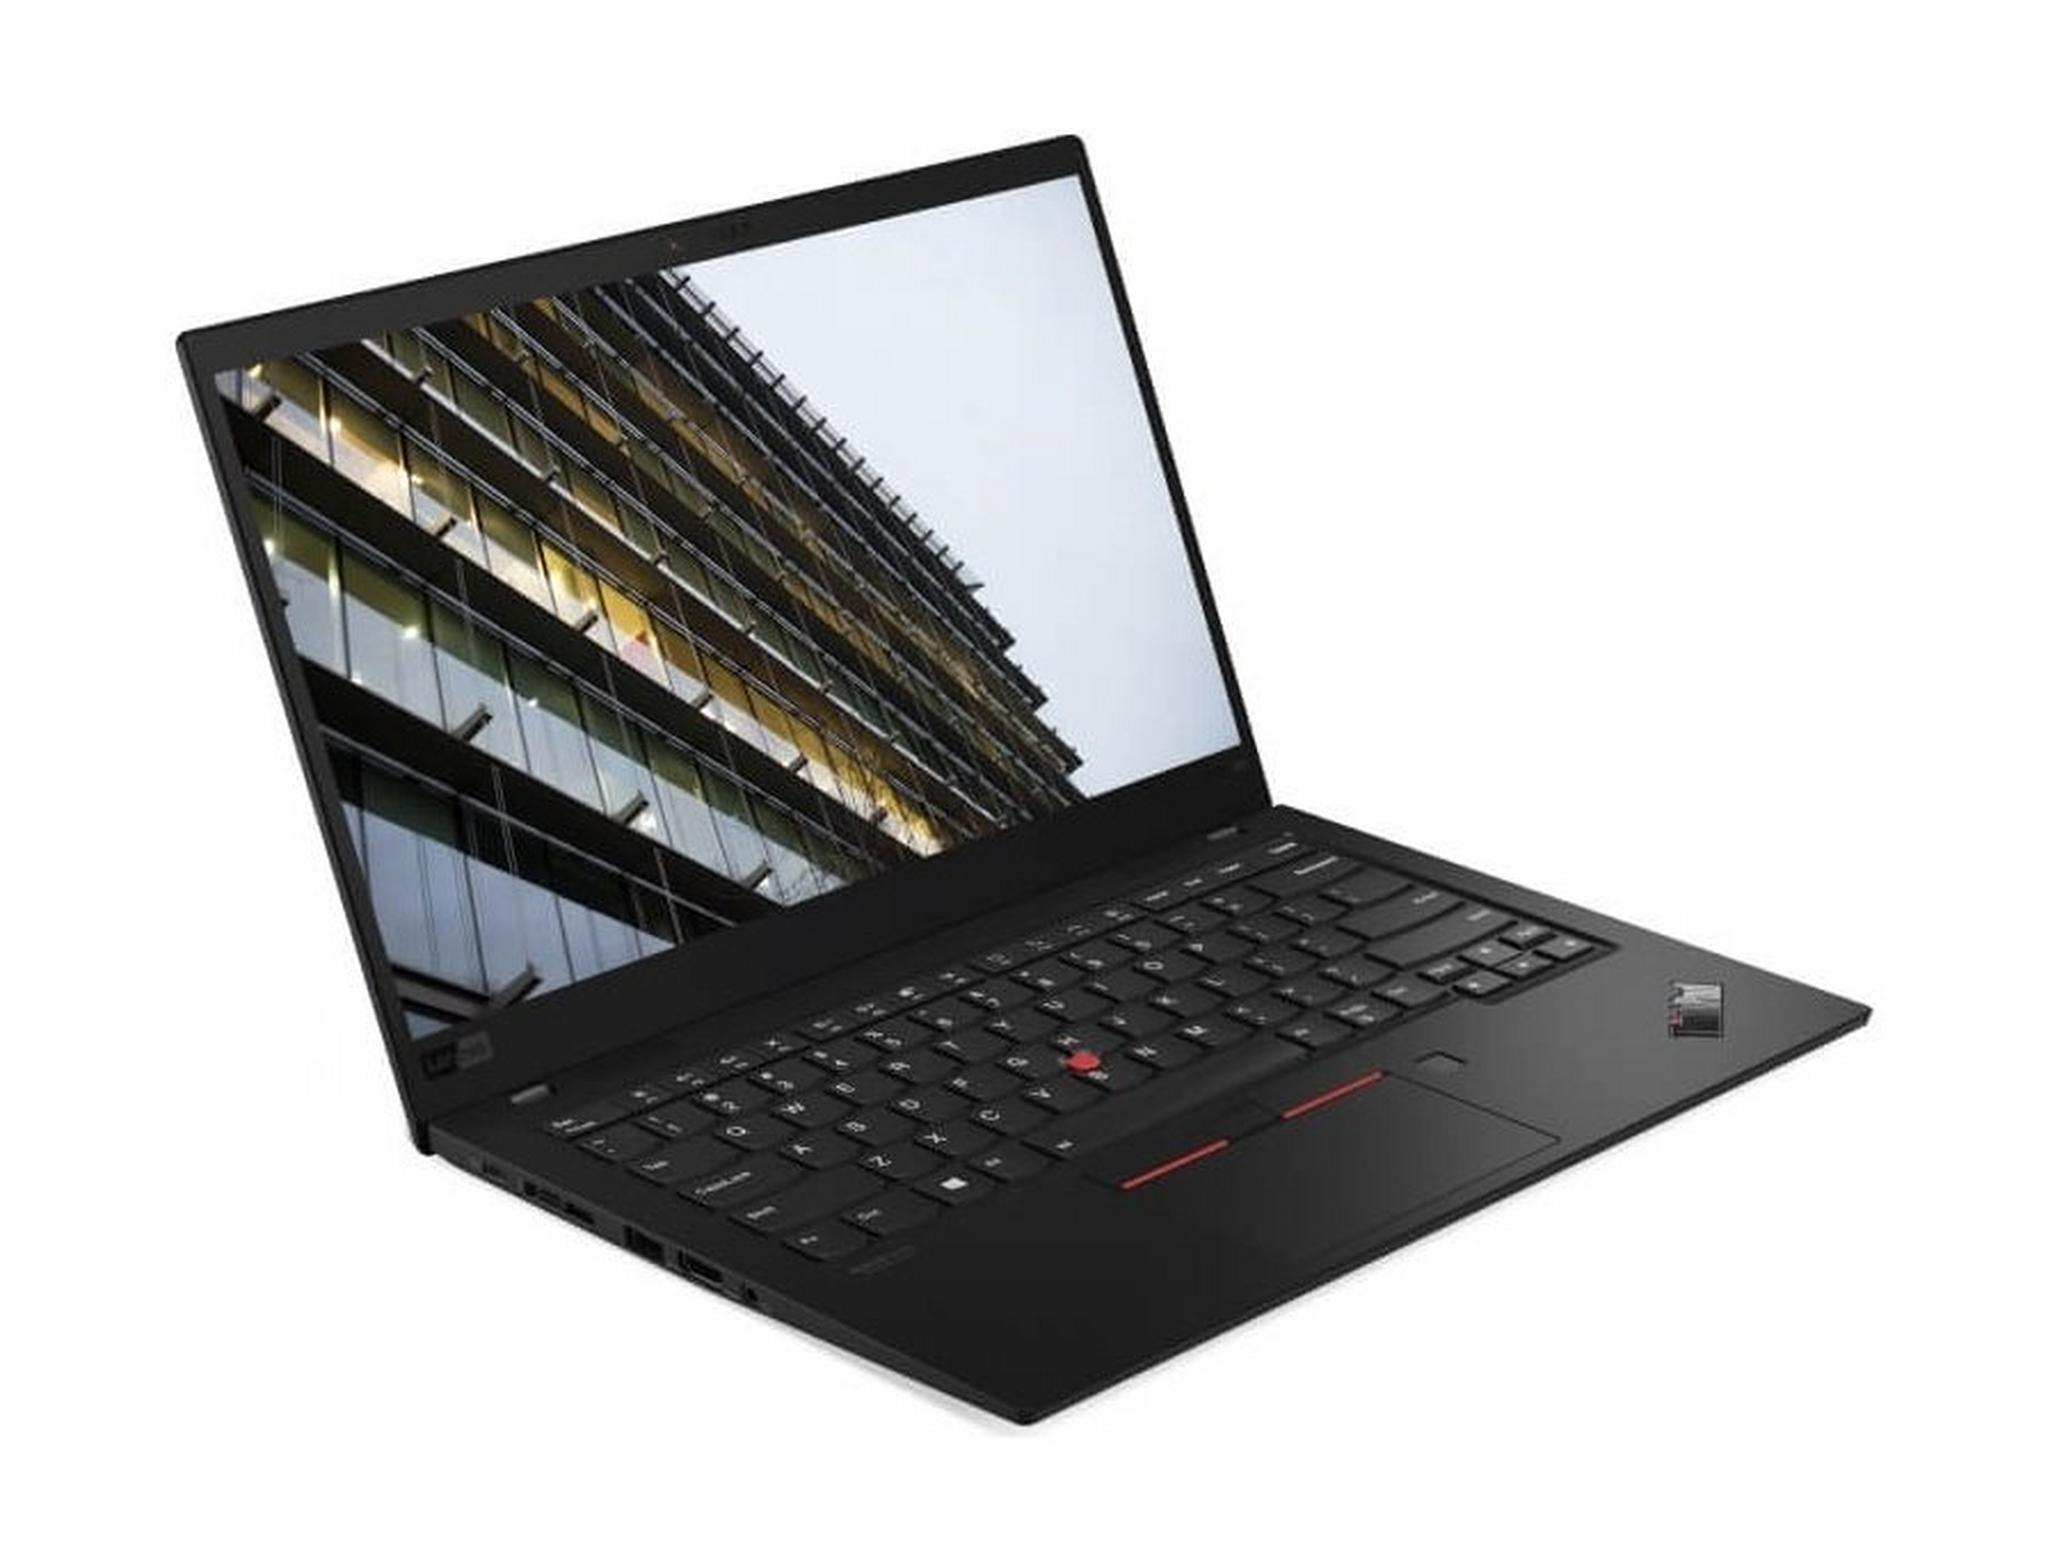 Lenovo ThinkPad X1 Carbon Intel Core i7 10th Gen, 16GB RAM, 512GB SSD 14-inch Laptop